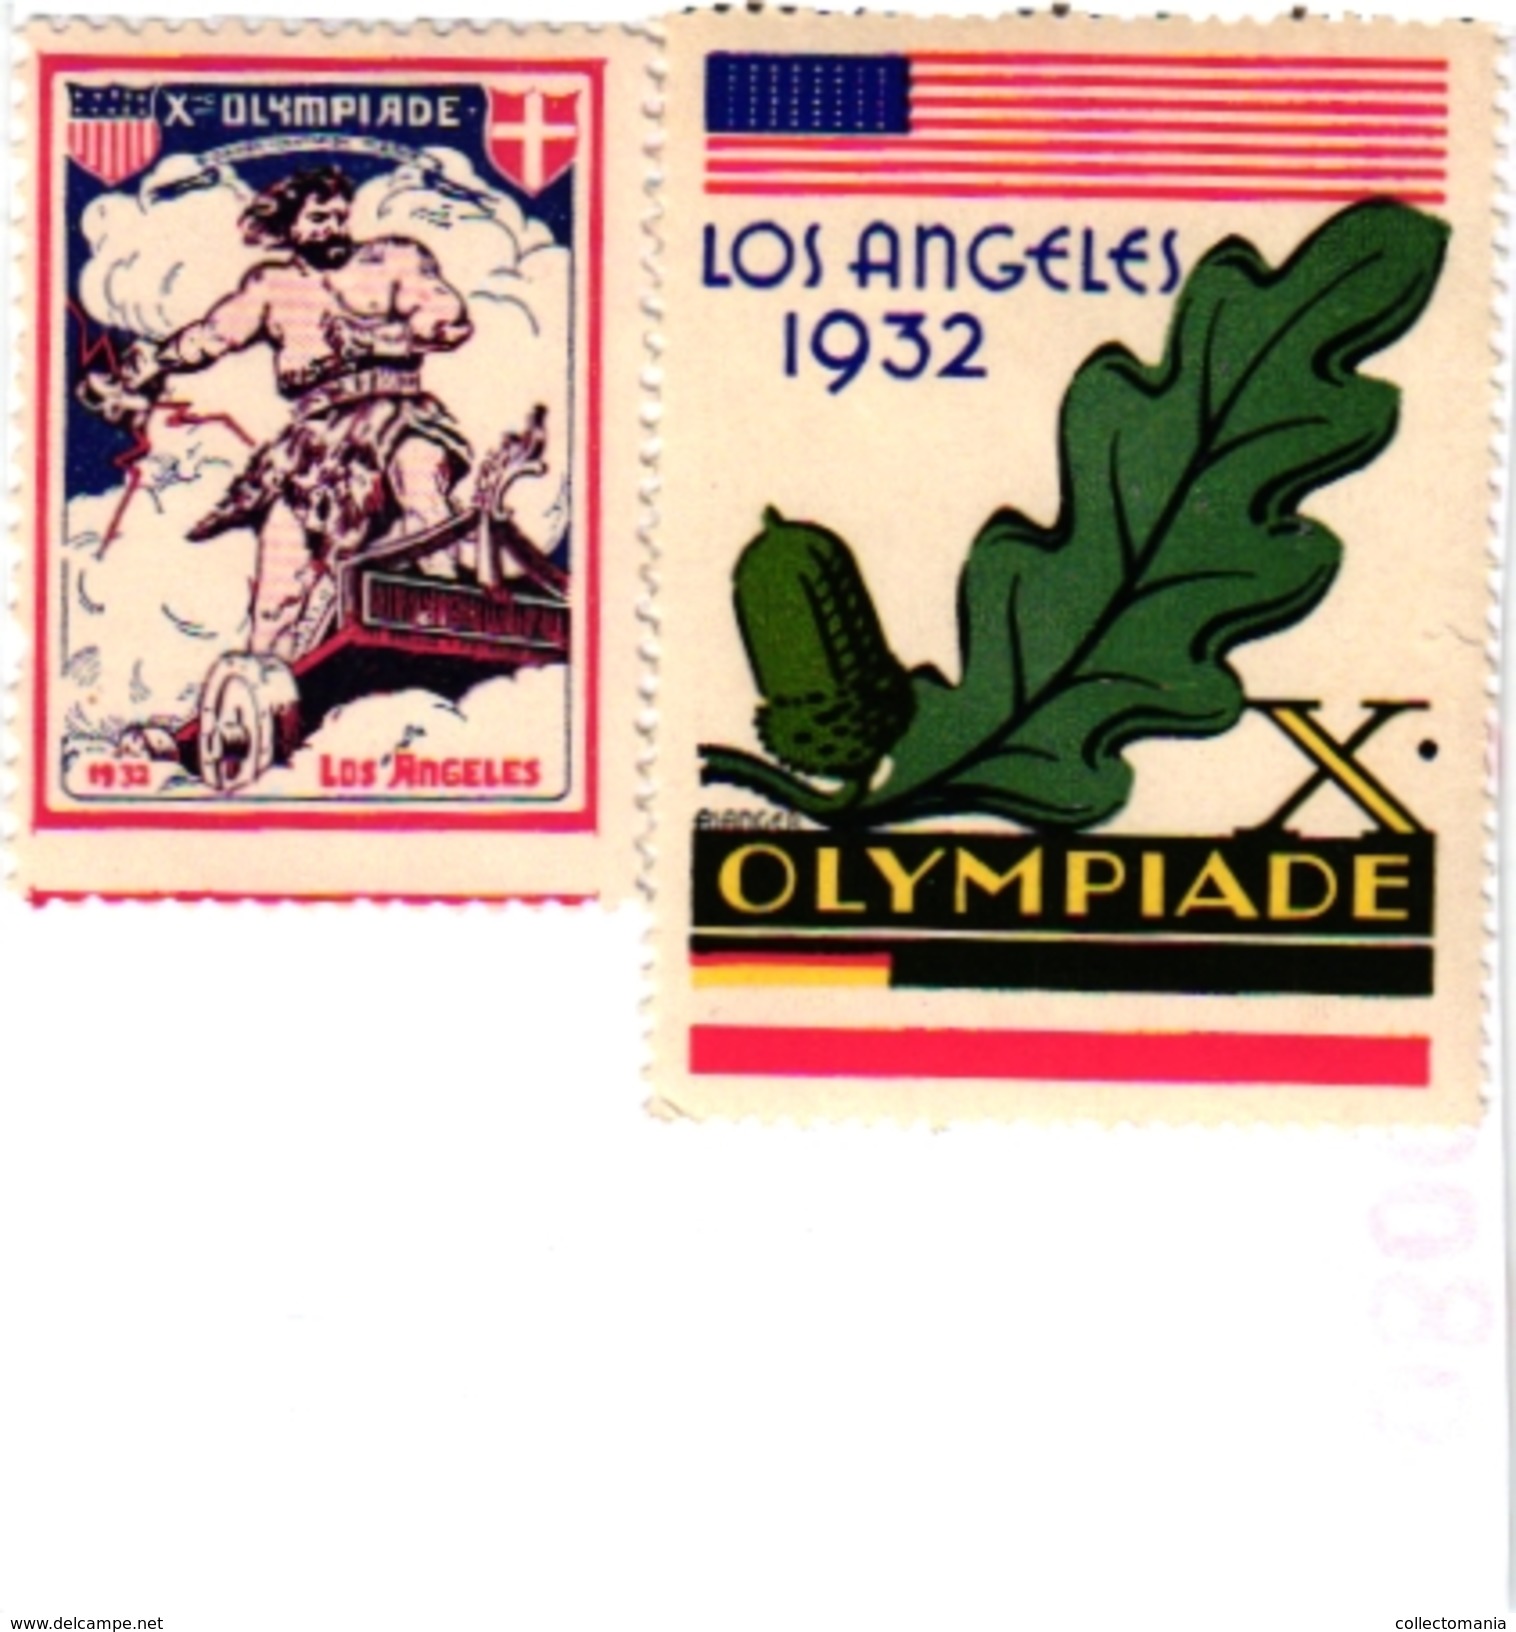 2 POSTER STAMPS Cinderella Olympiade LOS ANGELES 1932 - Ete 1932: Los Angeles